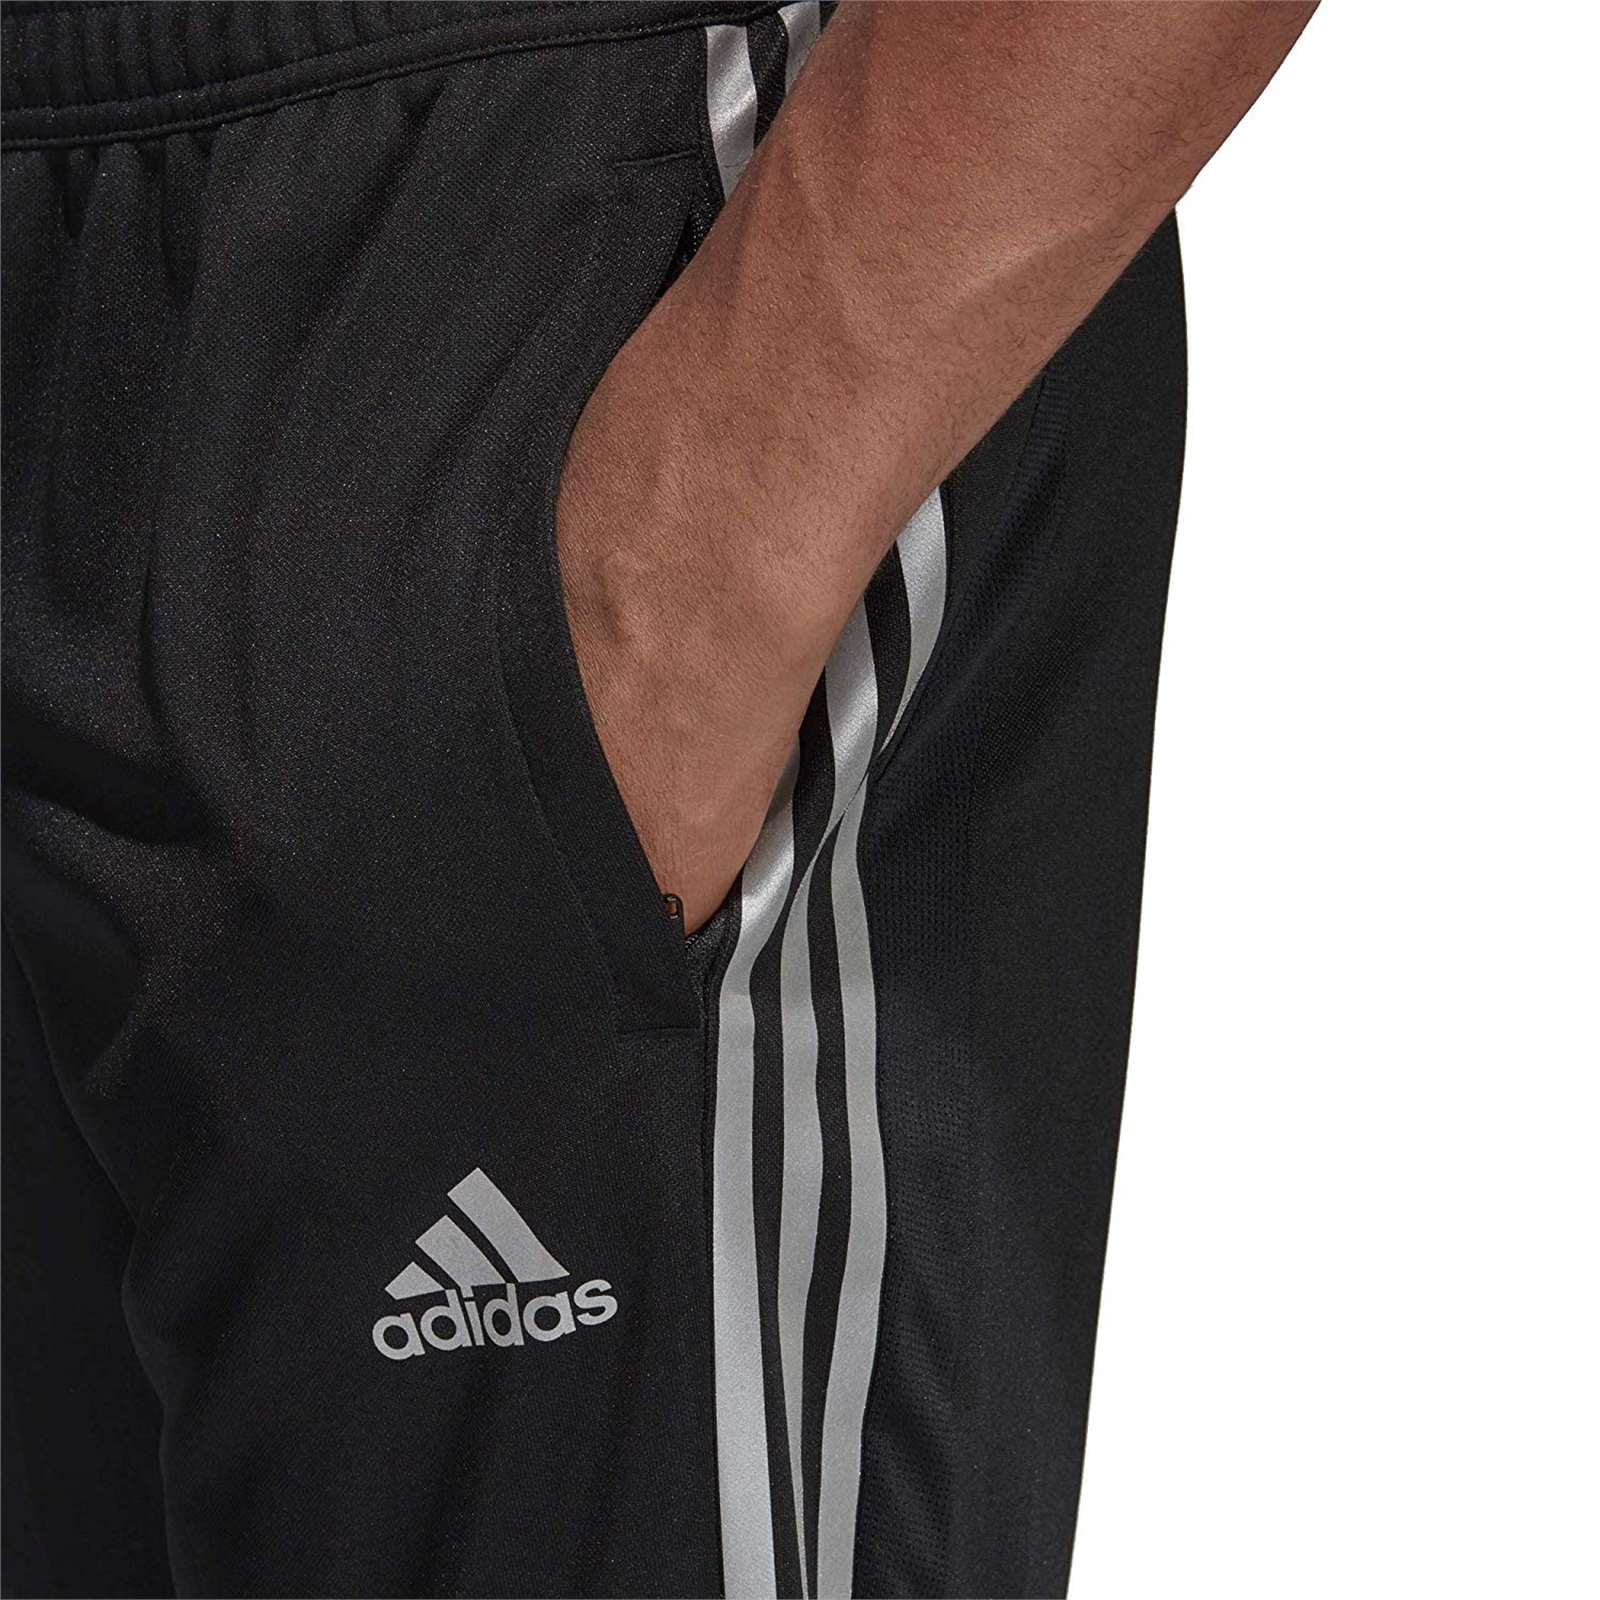 Viaje Tan rápido como un flash visitar New Adidas Tiro 19 Climacool Men's Athletic Workout Training Slim Fit Pants  - Walmart.com